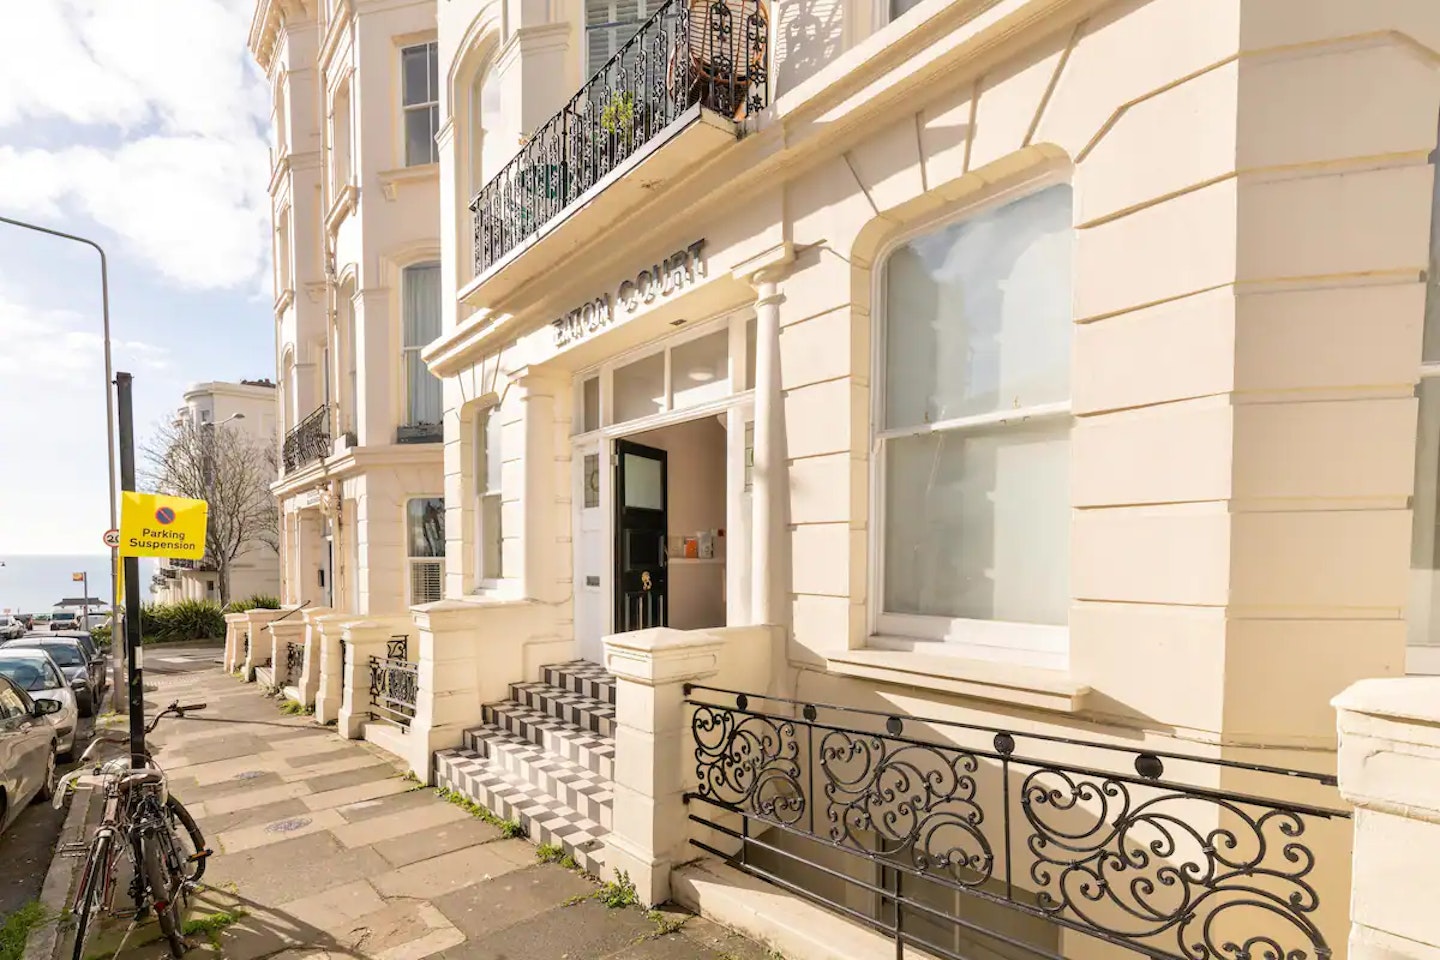 Best Airbnbs In Brighton